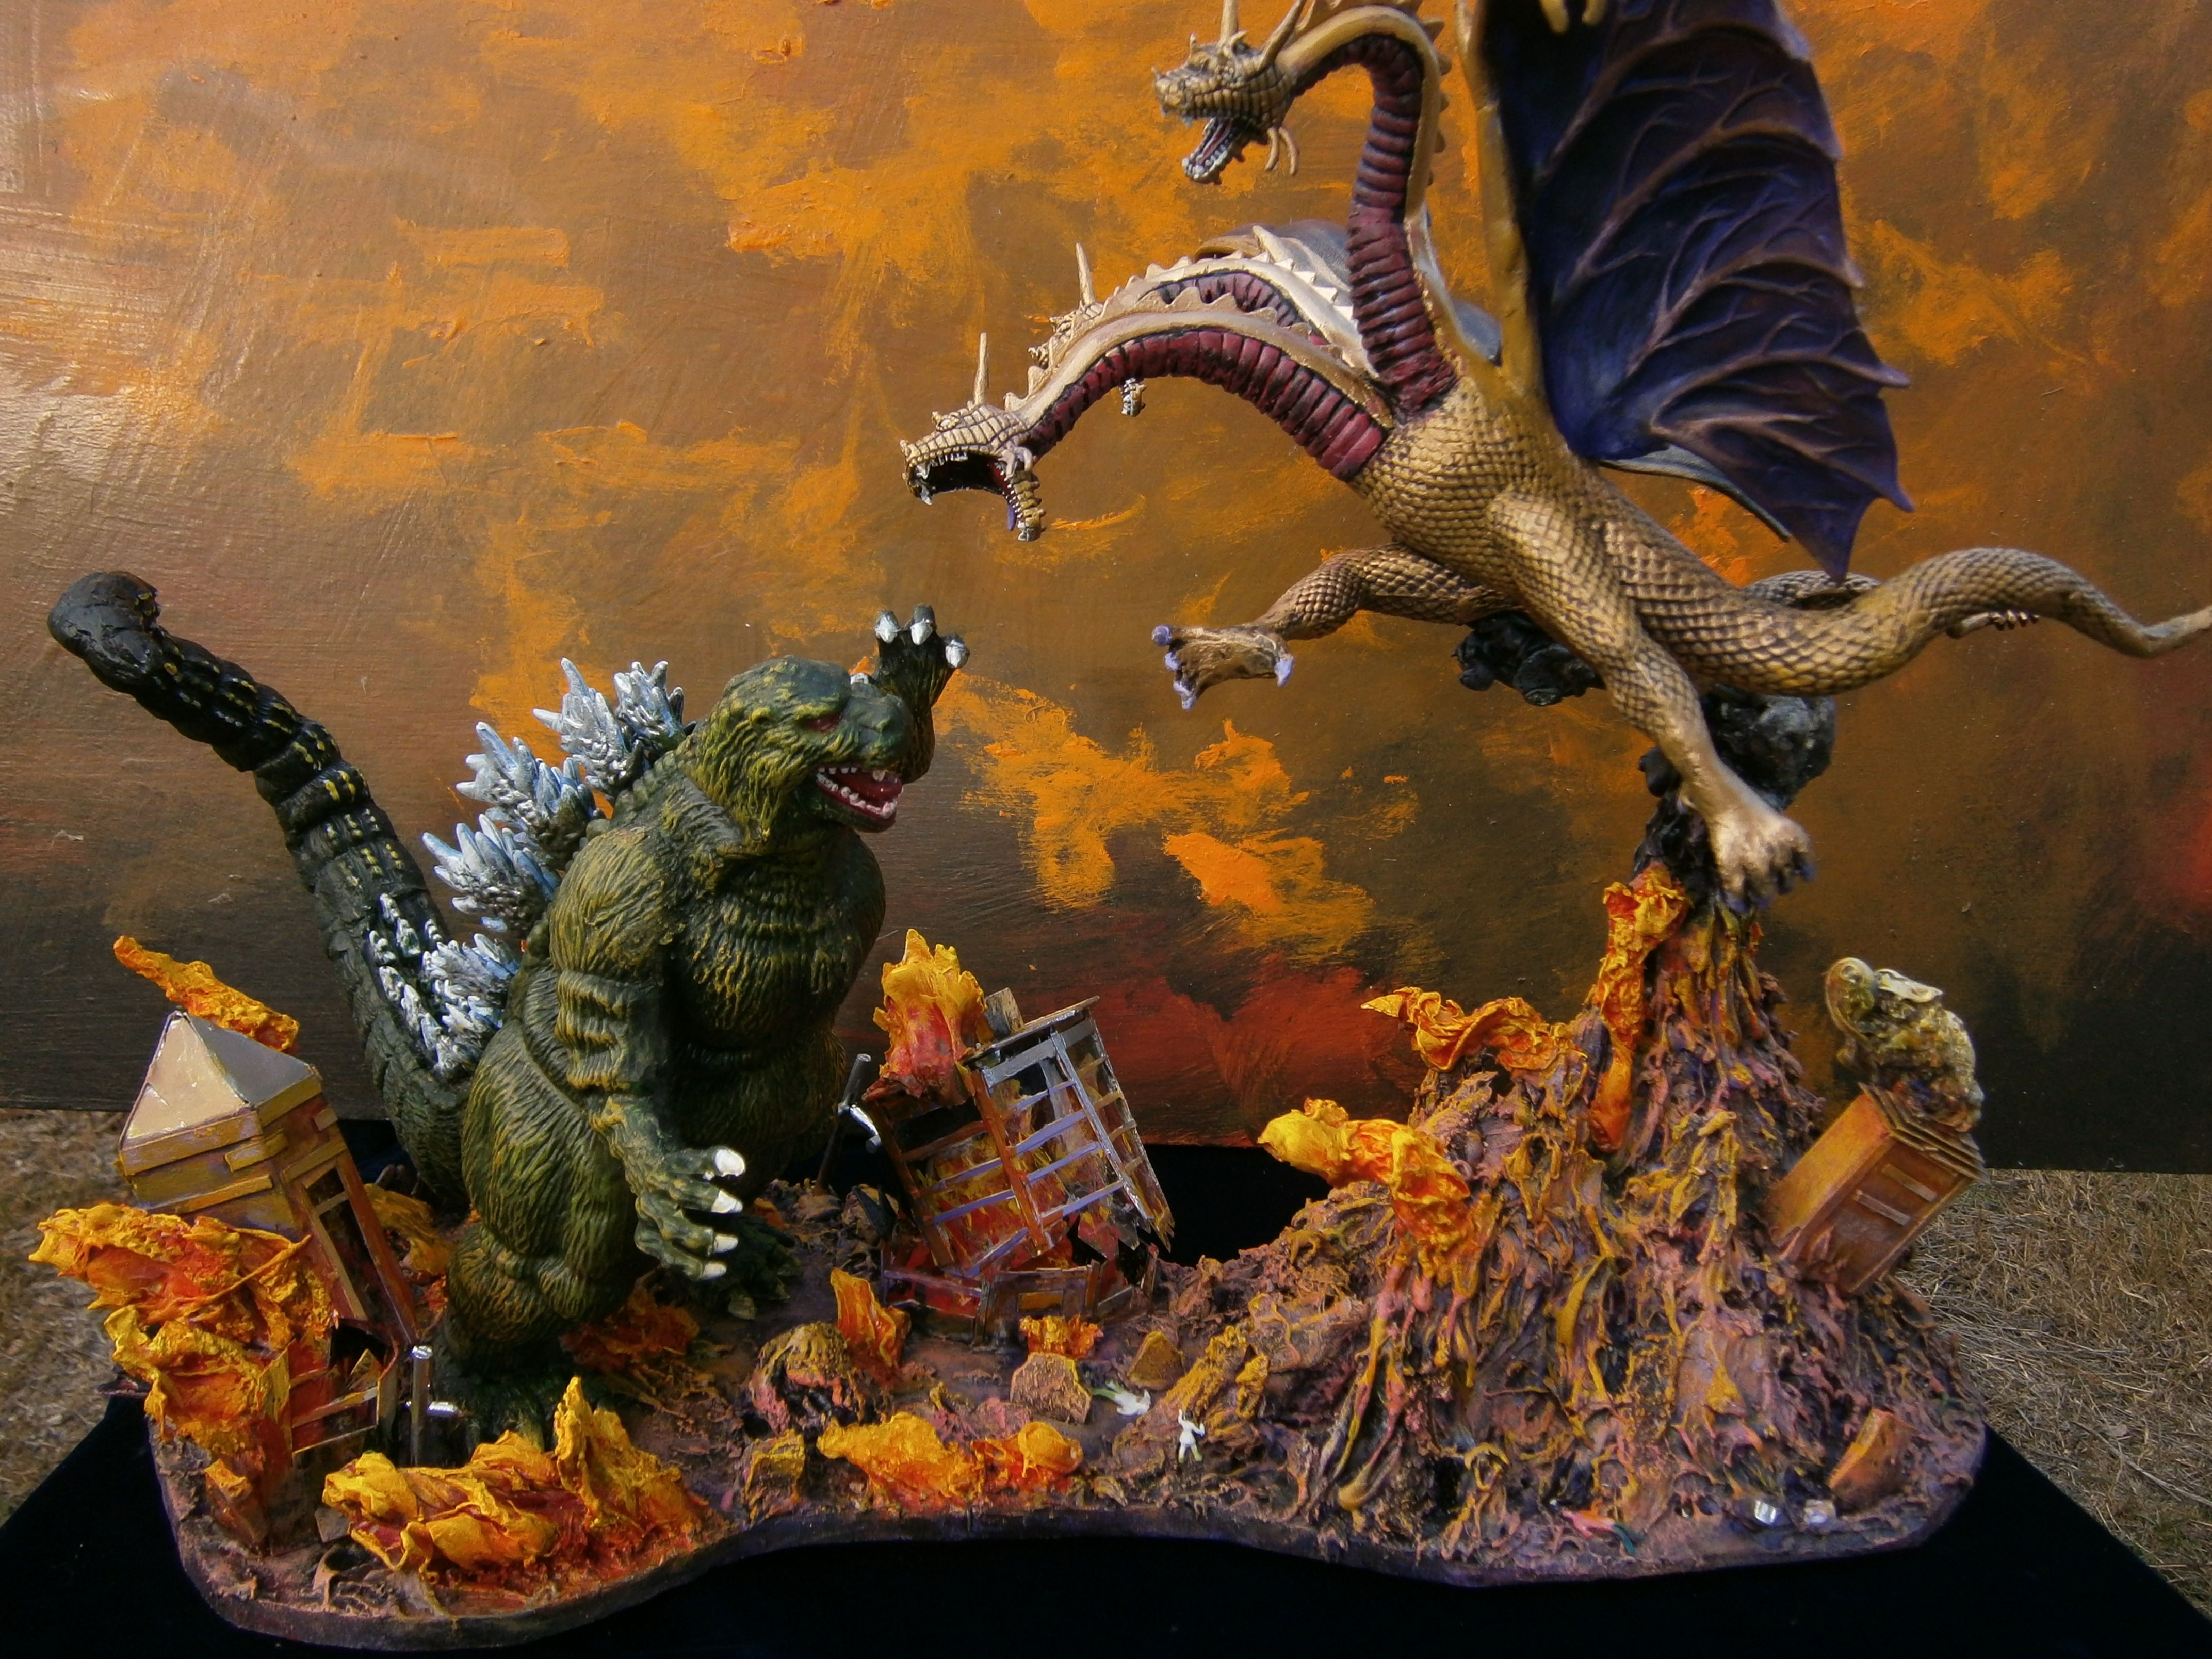 Godzilla vs. King Ghidorah HD Wallpaper and Background Image